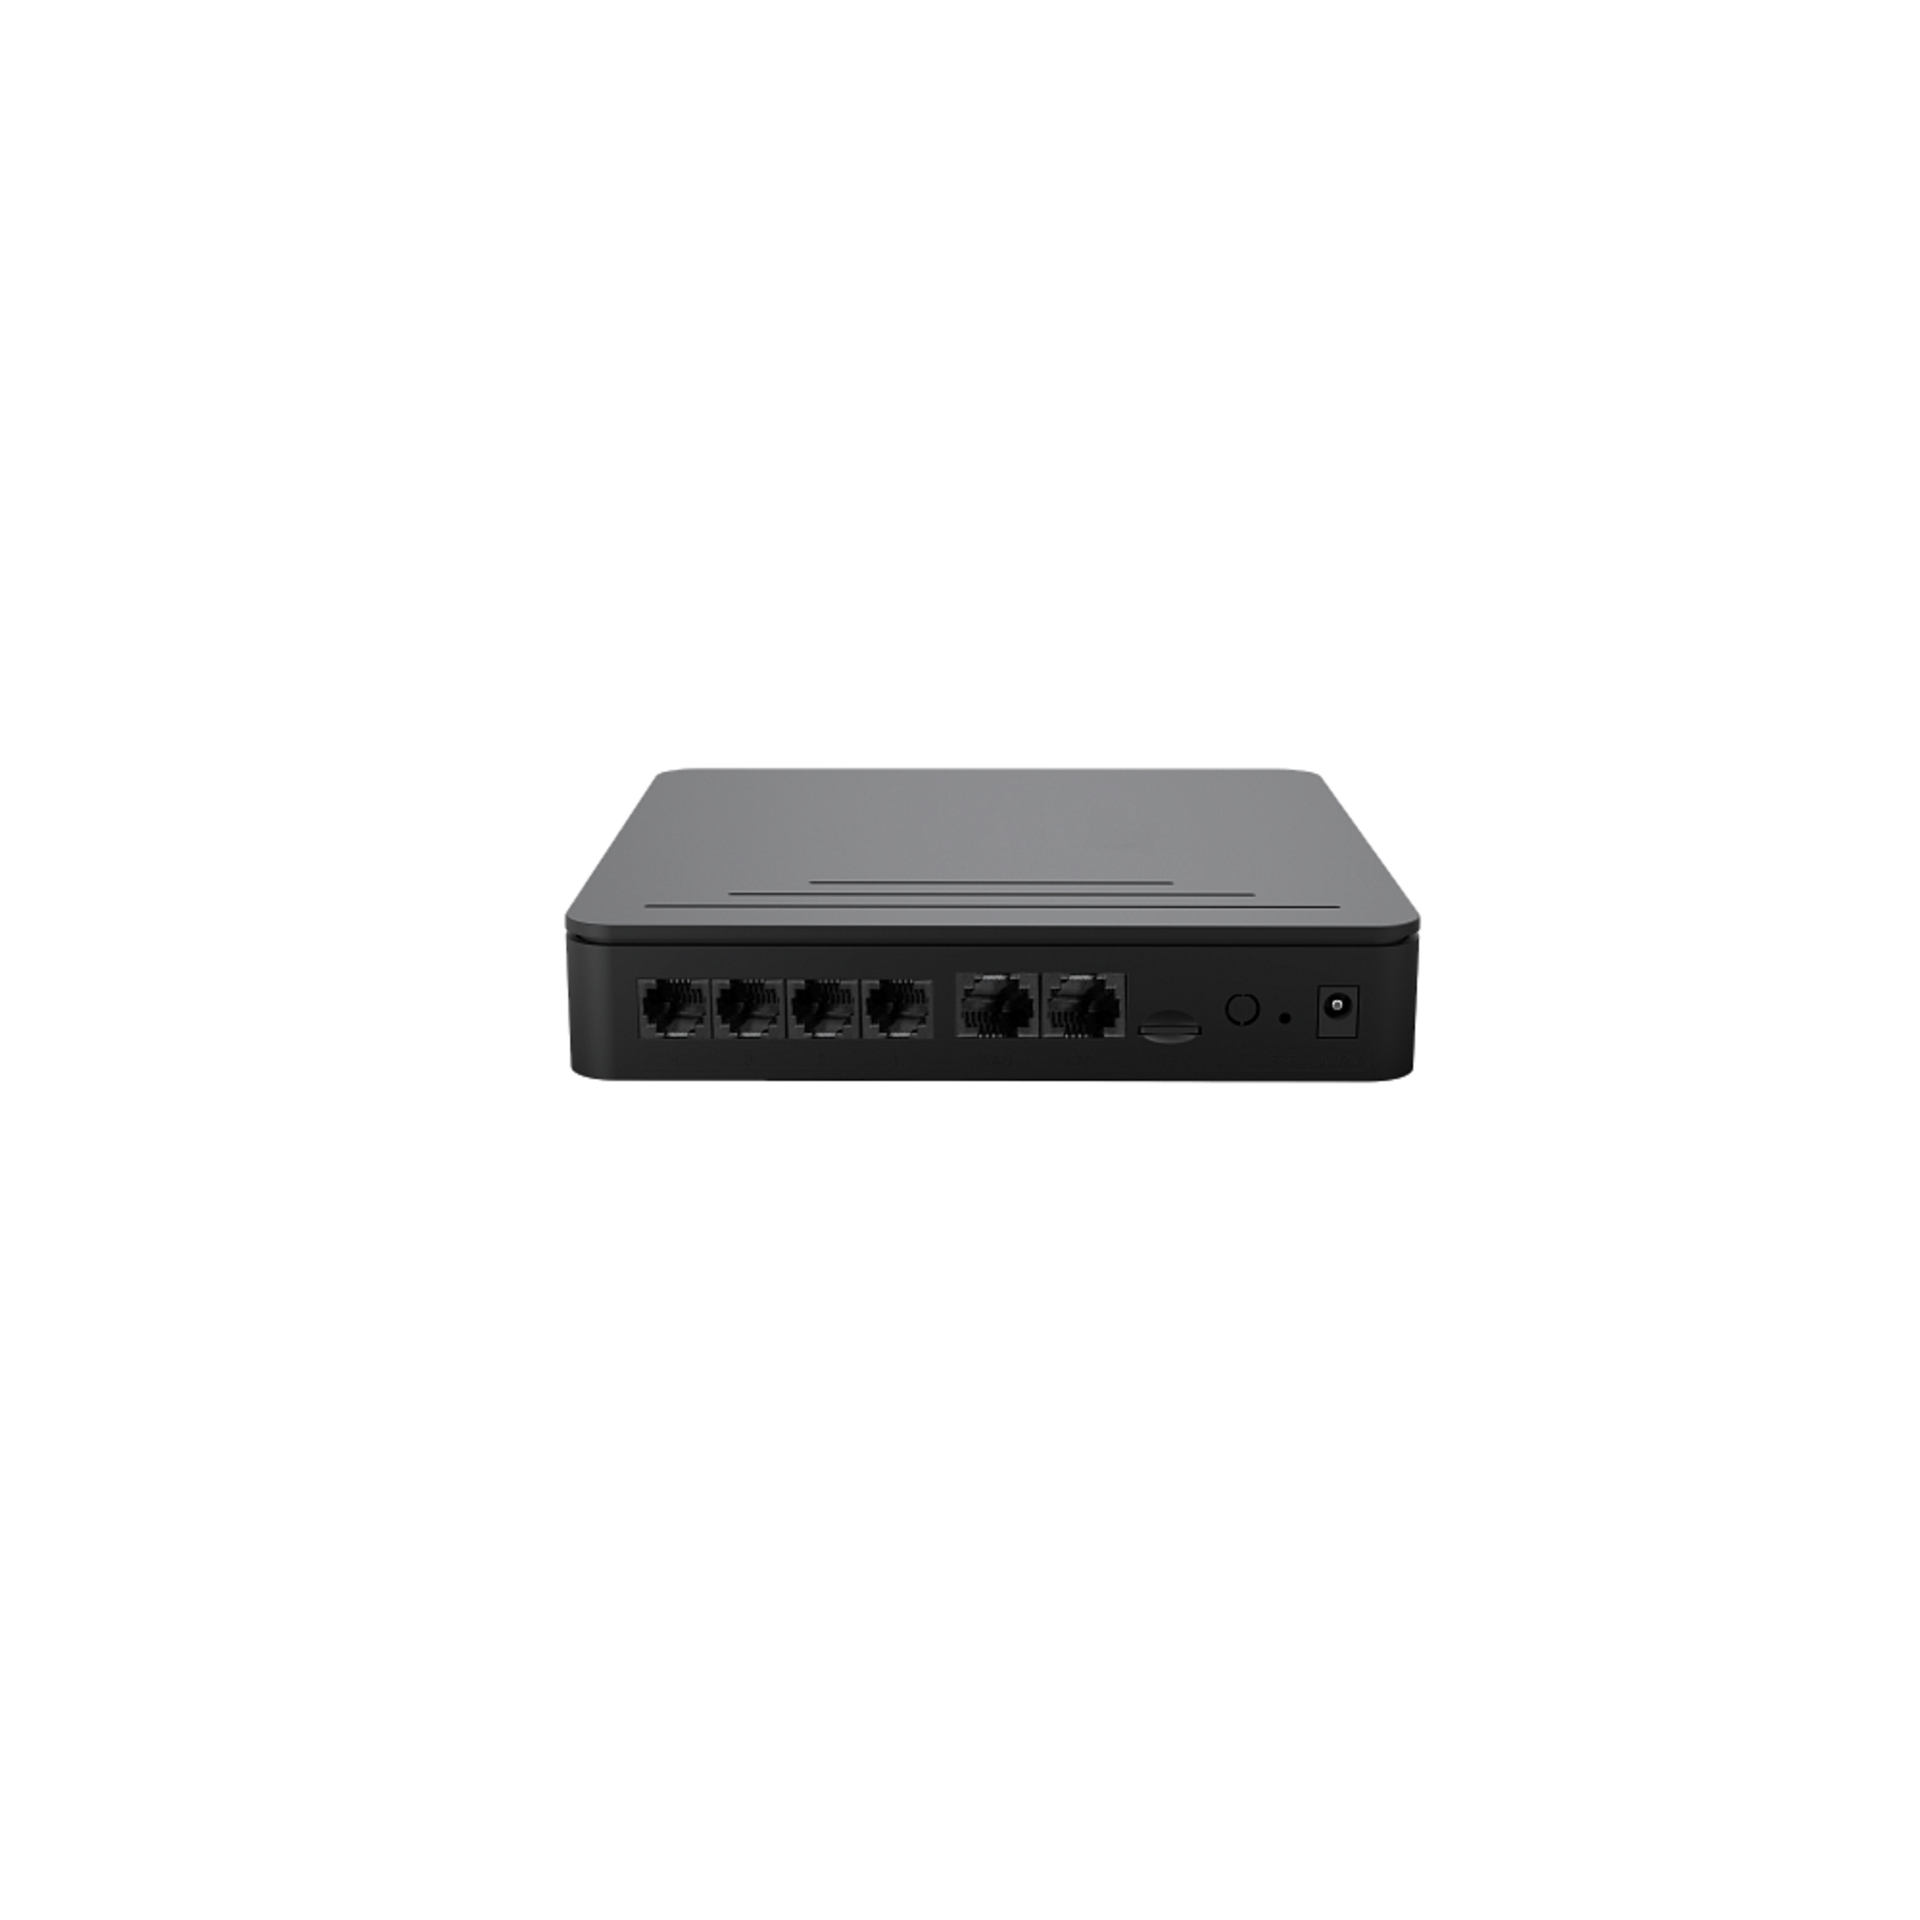 Yeastar S20 IP АТС Yeastar S20 20 абонентов и 10 вызовов поддержка FXO FXS GSM BRI (sn: 3691B4407194)